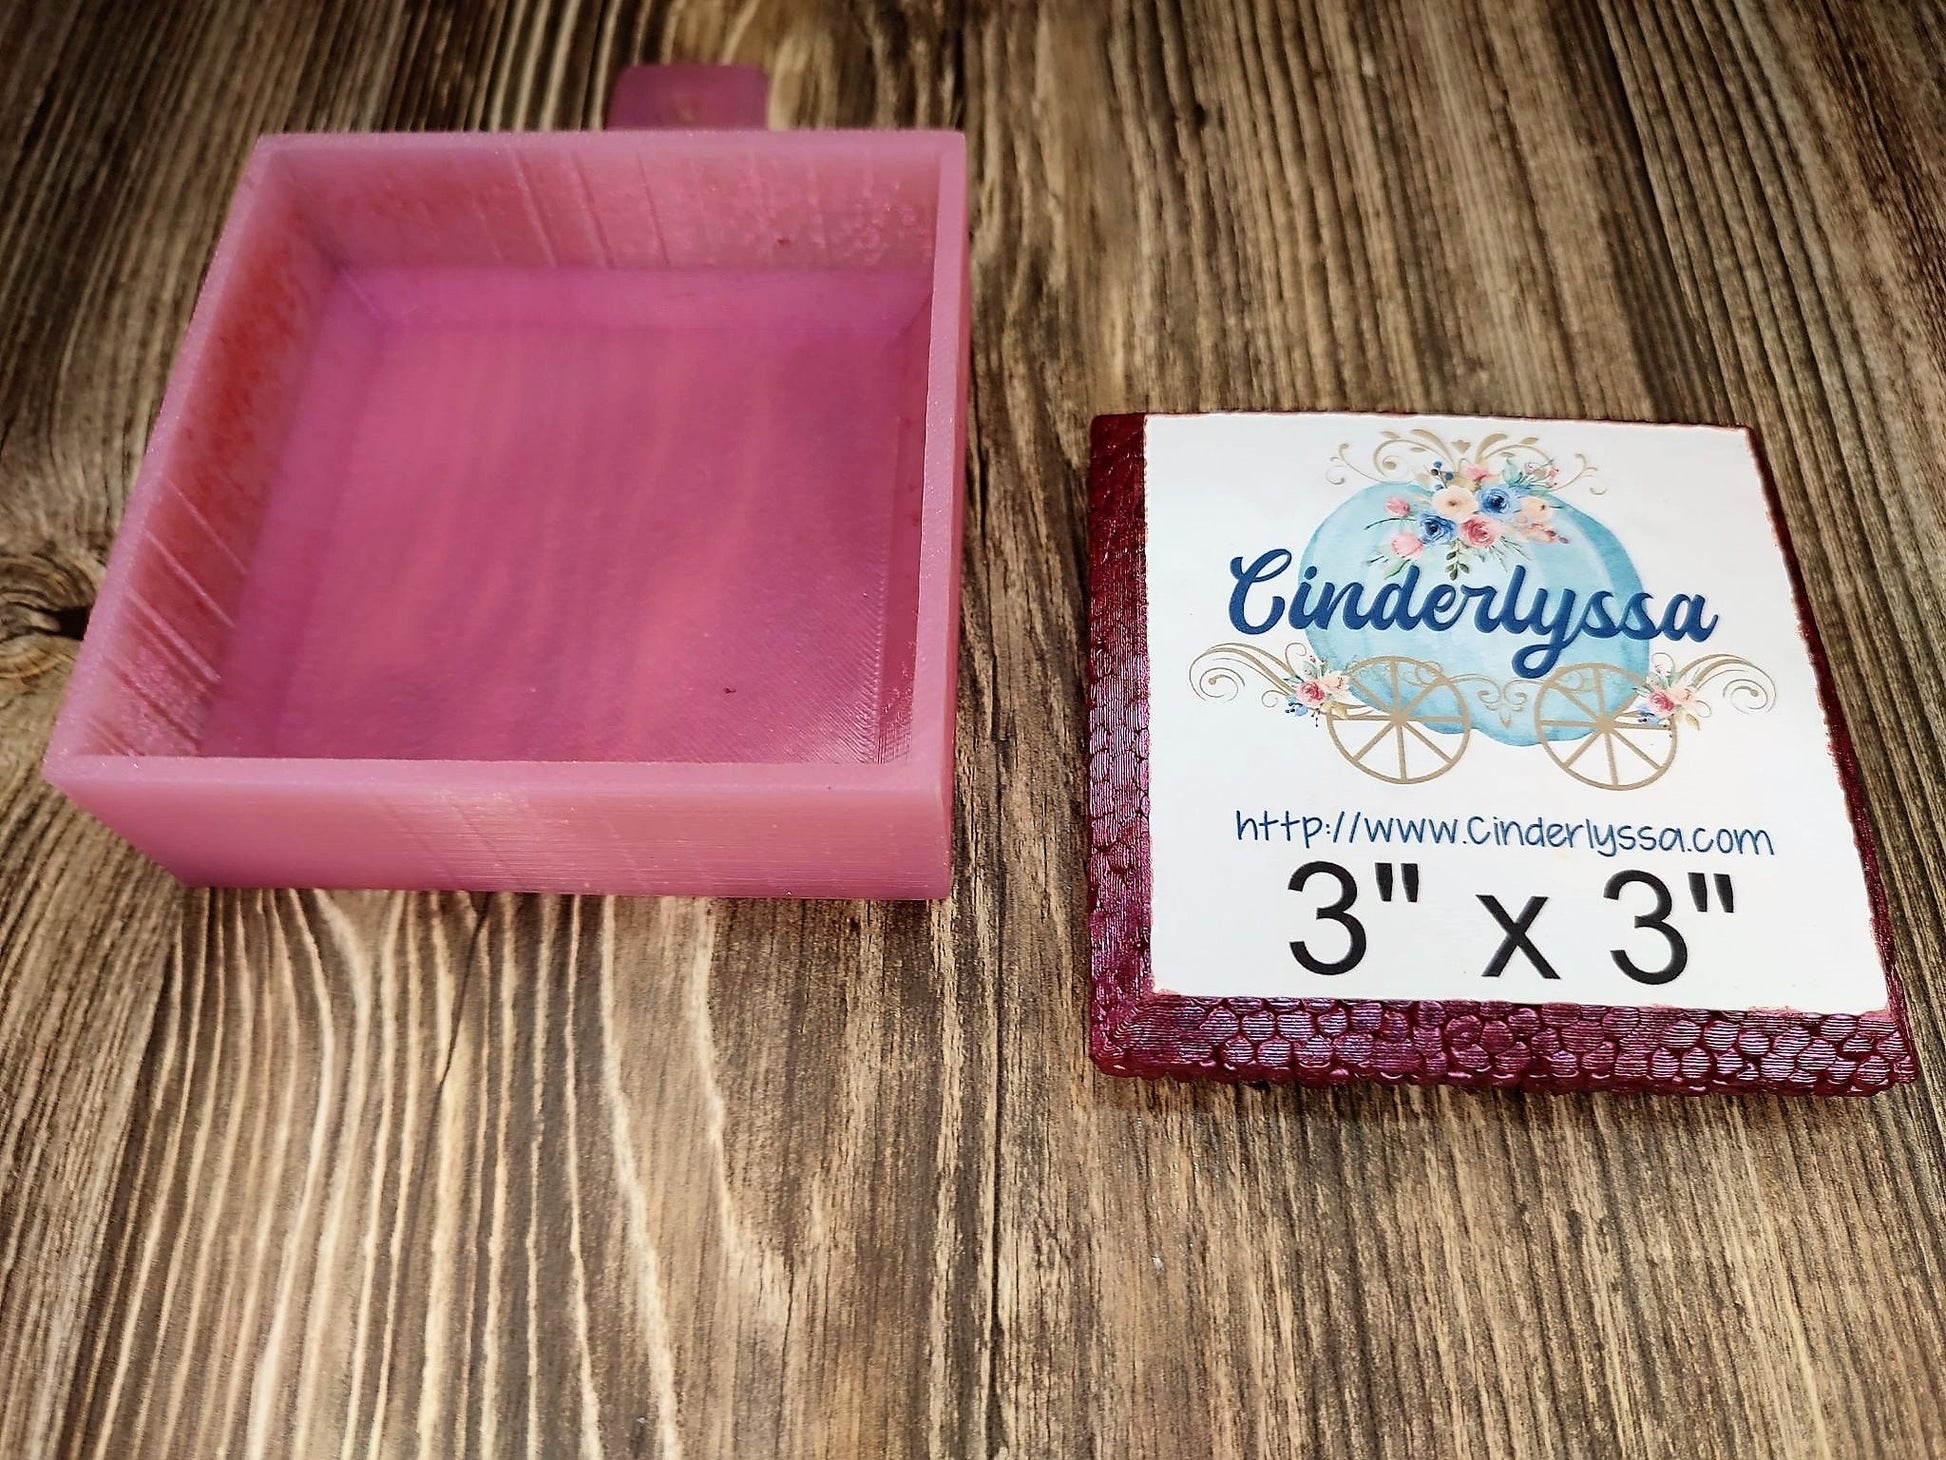 3 inch Square: Gemstone Rosebud Theme Cardstock/Picture With Beveled Edge Silicone Mold, Aroma Bead Molds, Car Freshener Mold